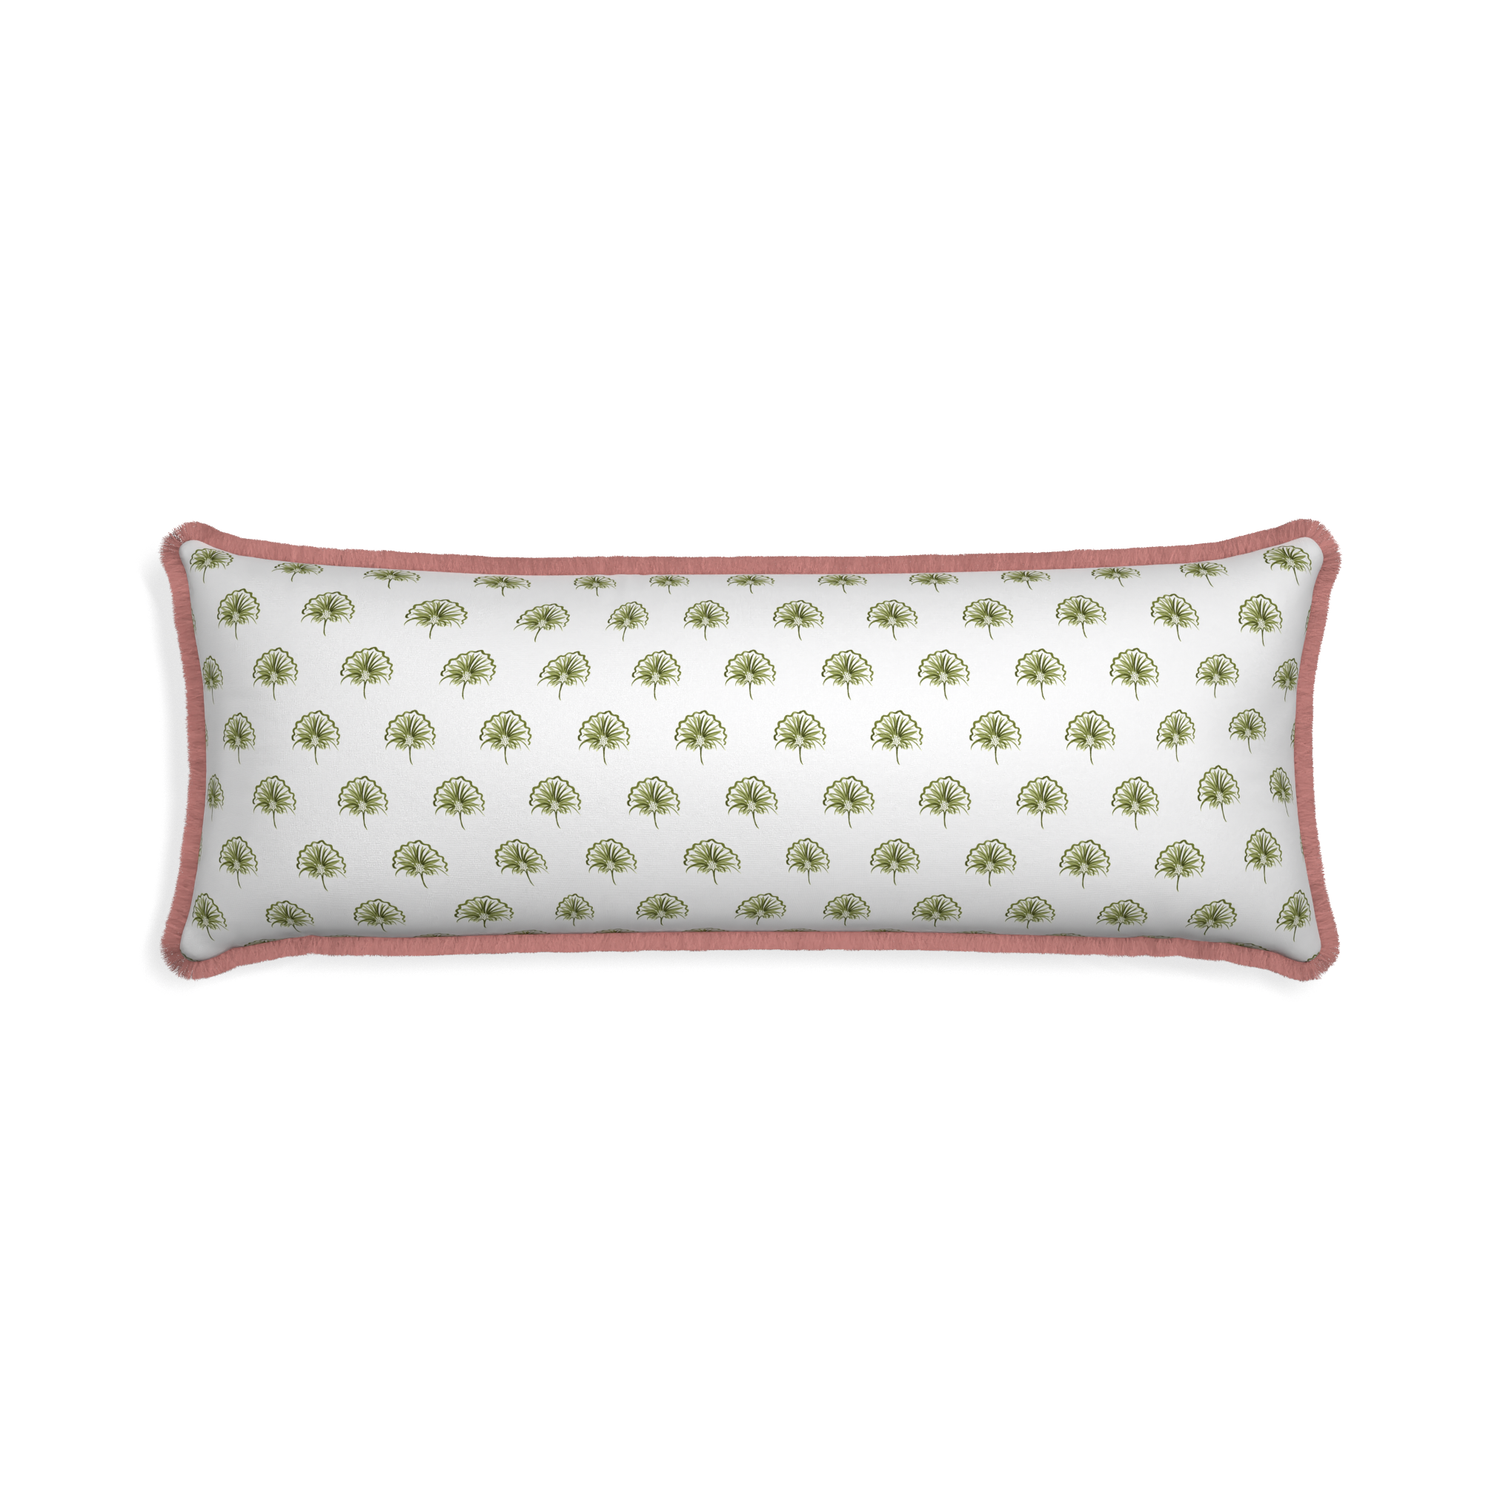 Xl-lumbar penelope moss custom pillow with d fringe on white background